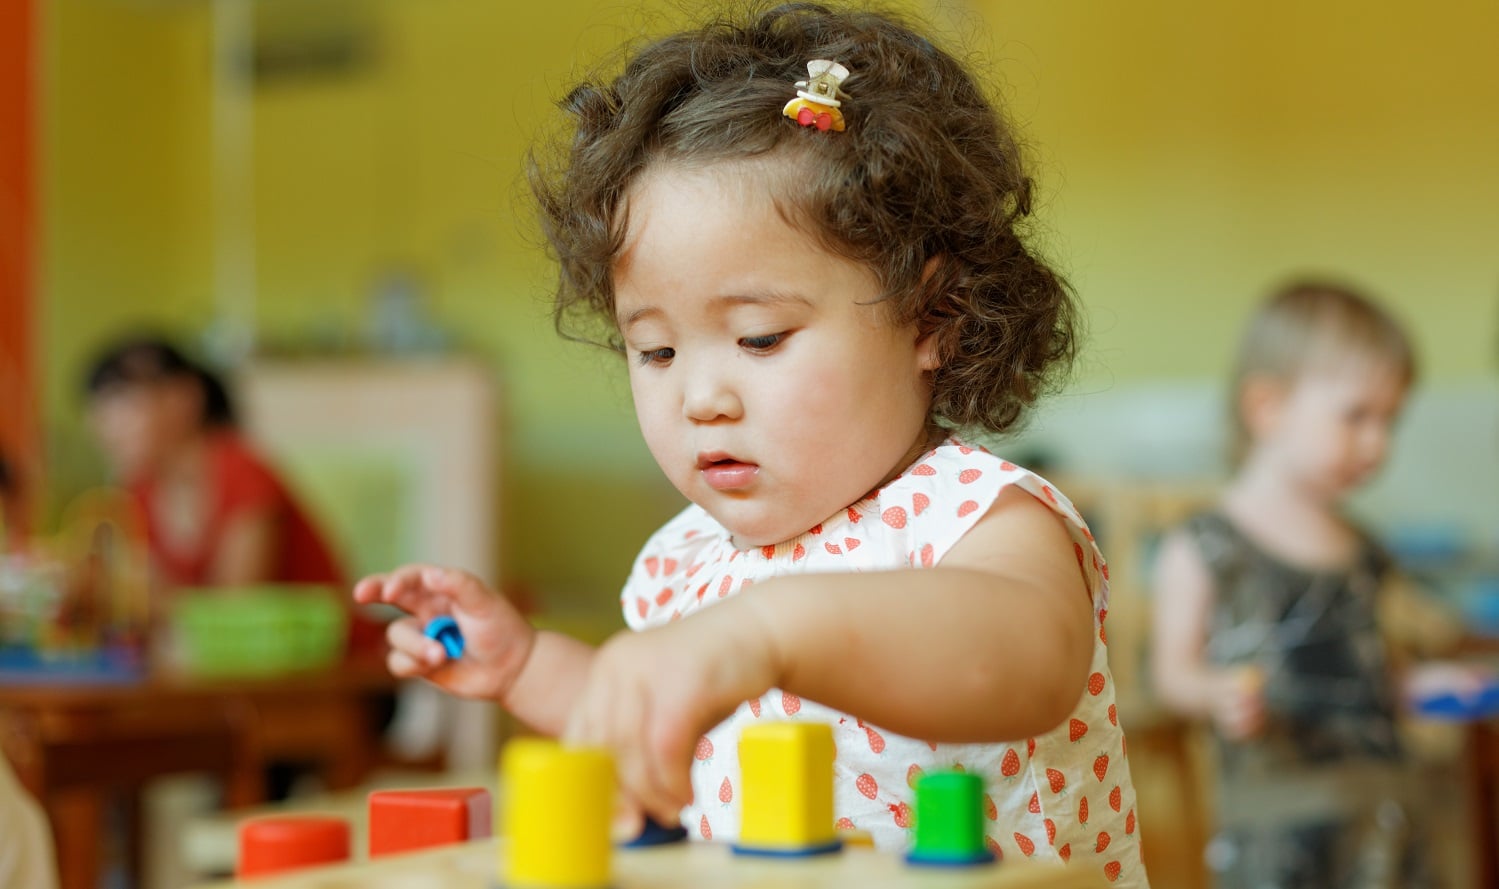 10 best preschools in delhi for your toddler - 13 Questions to Ask When Choosing a Preschool